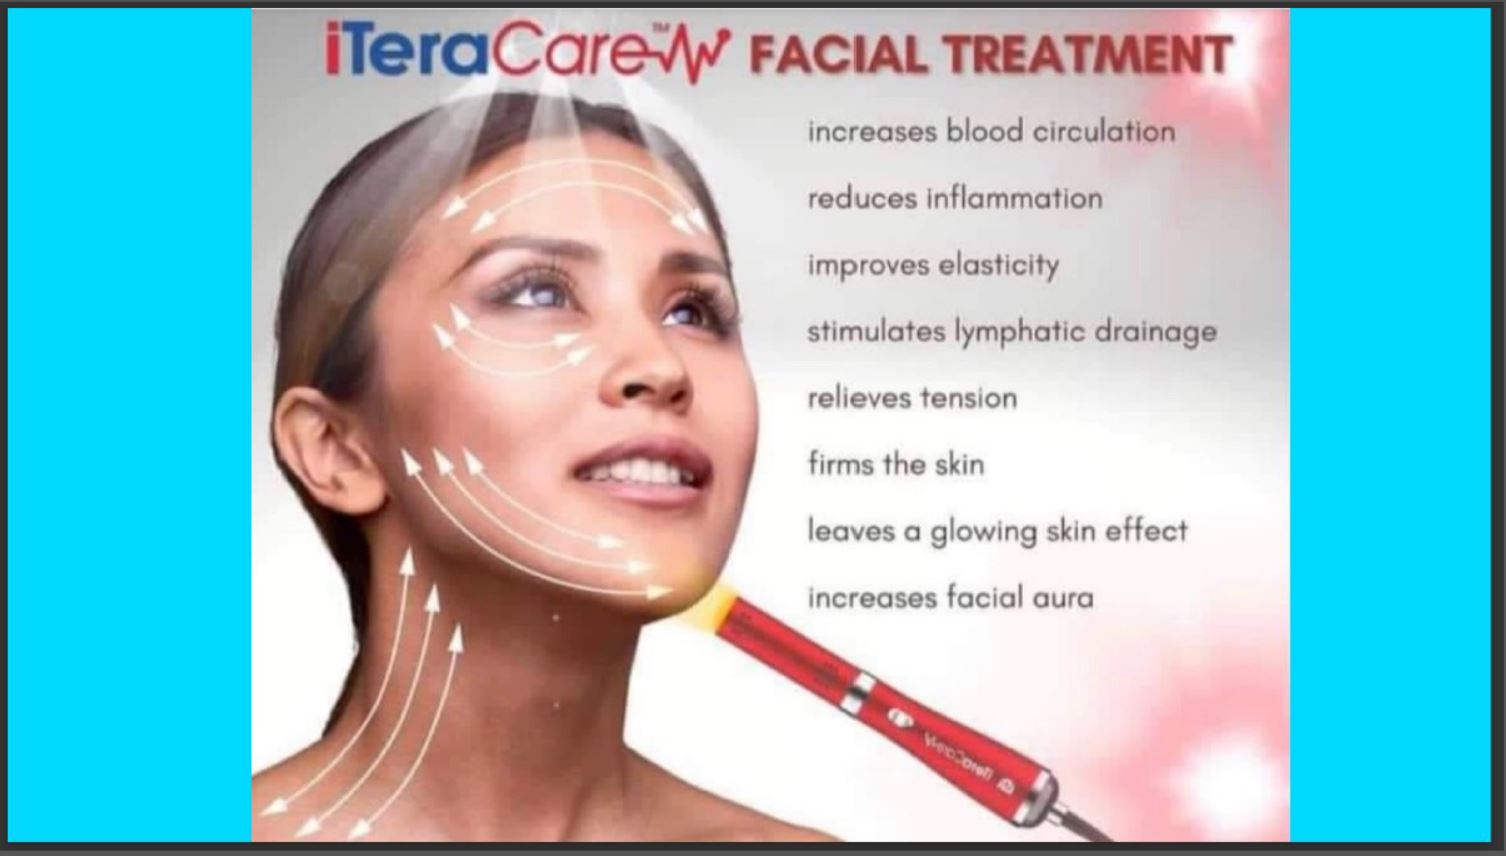 iTeraCare facial treatment